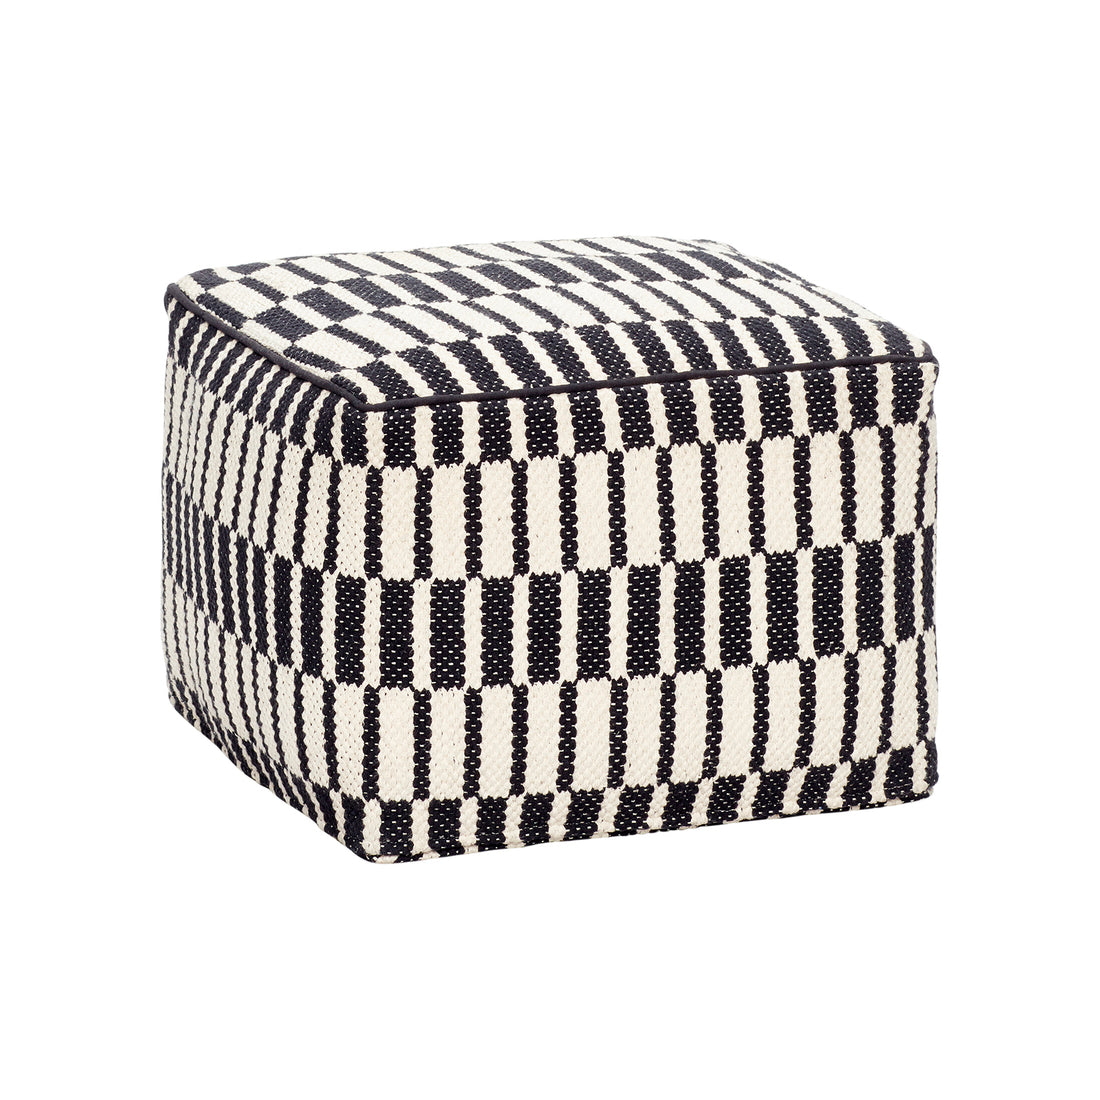 Hübsch pouf with pattern - black/white cotton 45x45xh35 cm